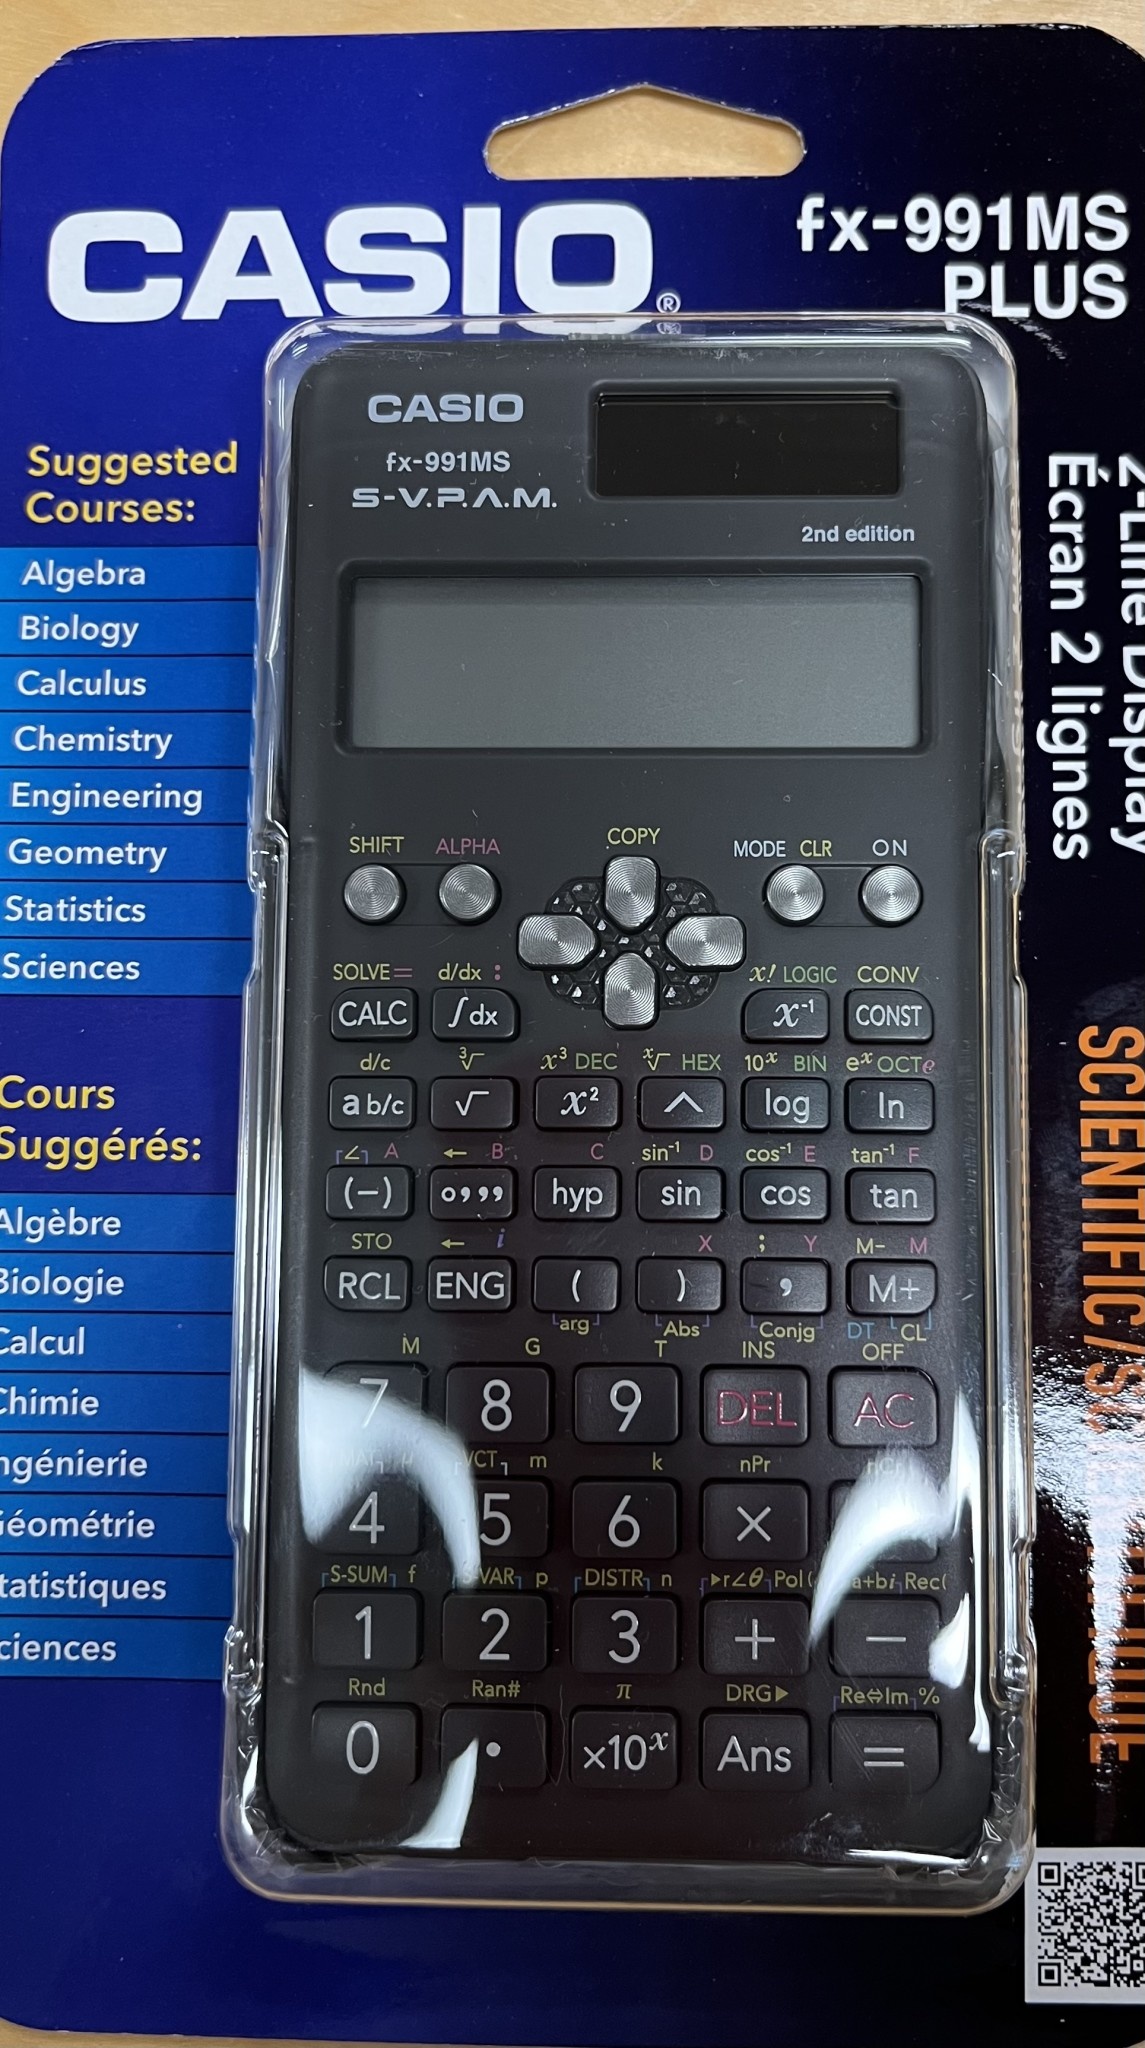 Calculator Casio FX-991MS Plus - The PA Shop@Bayview Glen